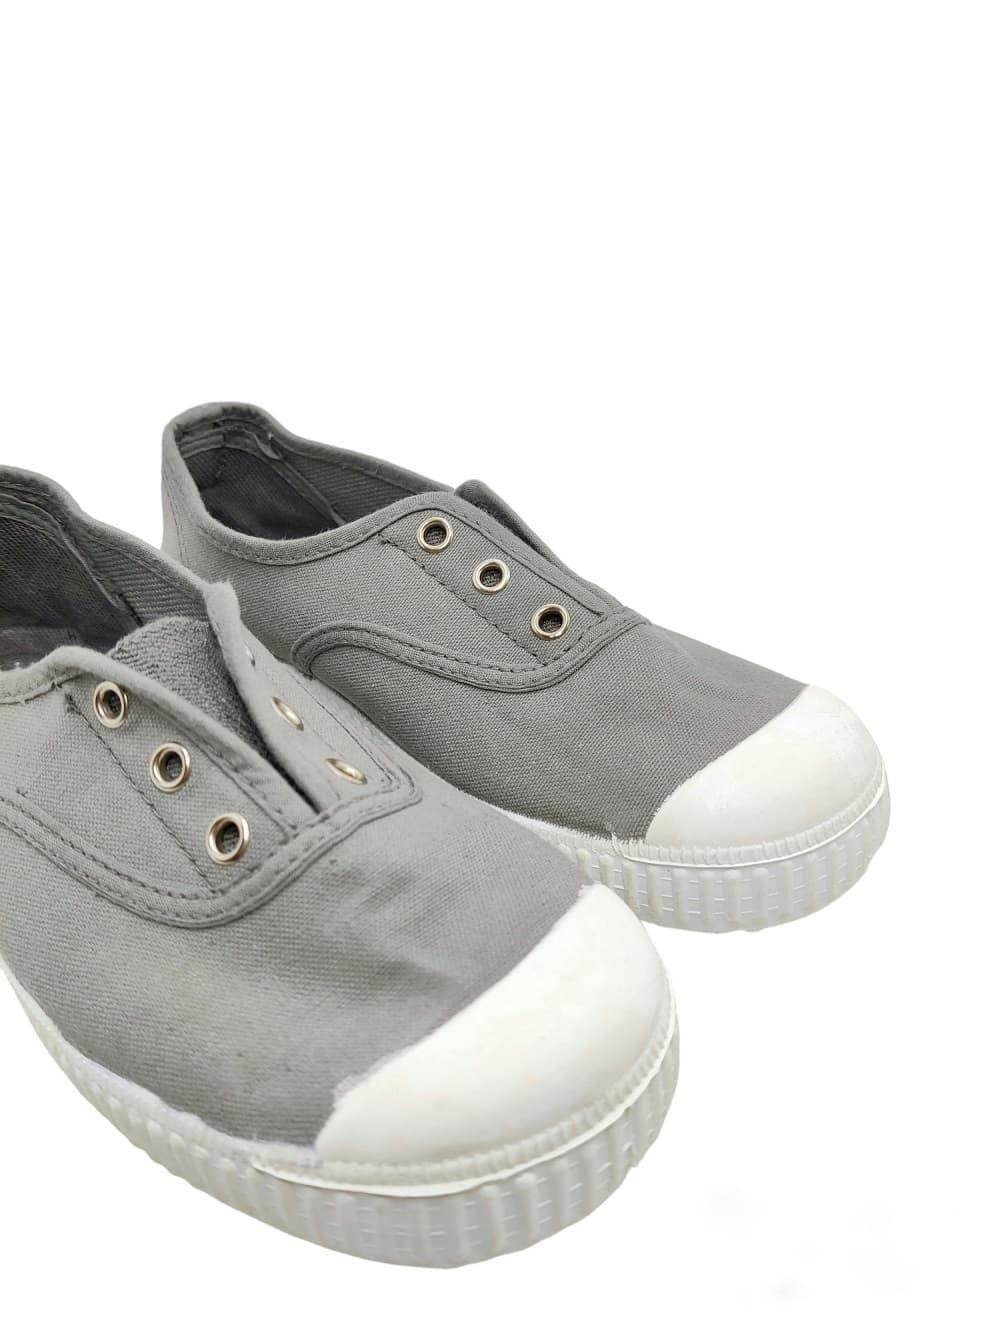 La Cadena Children's Sneakers Gray Canvas with Toe - Image 4